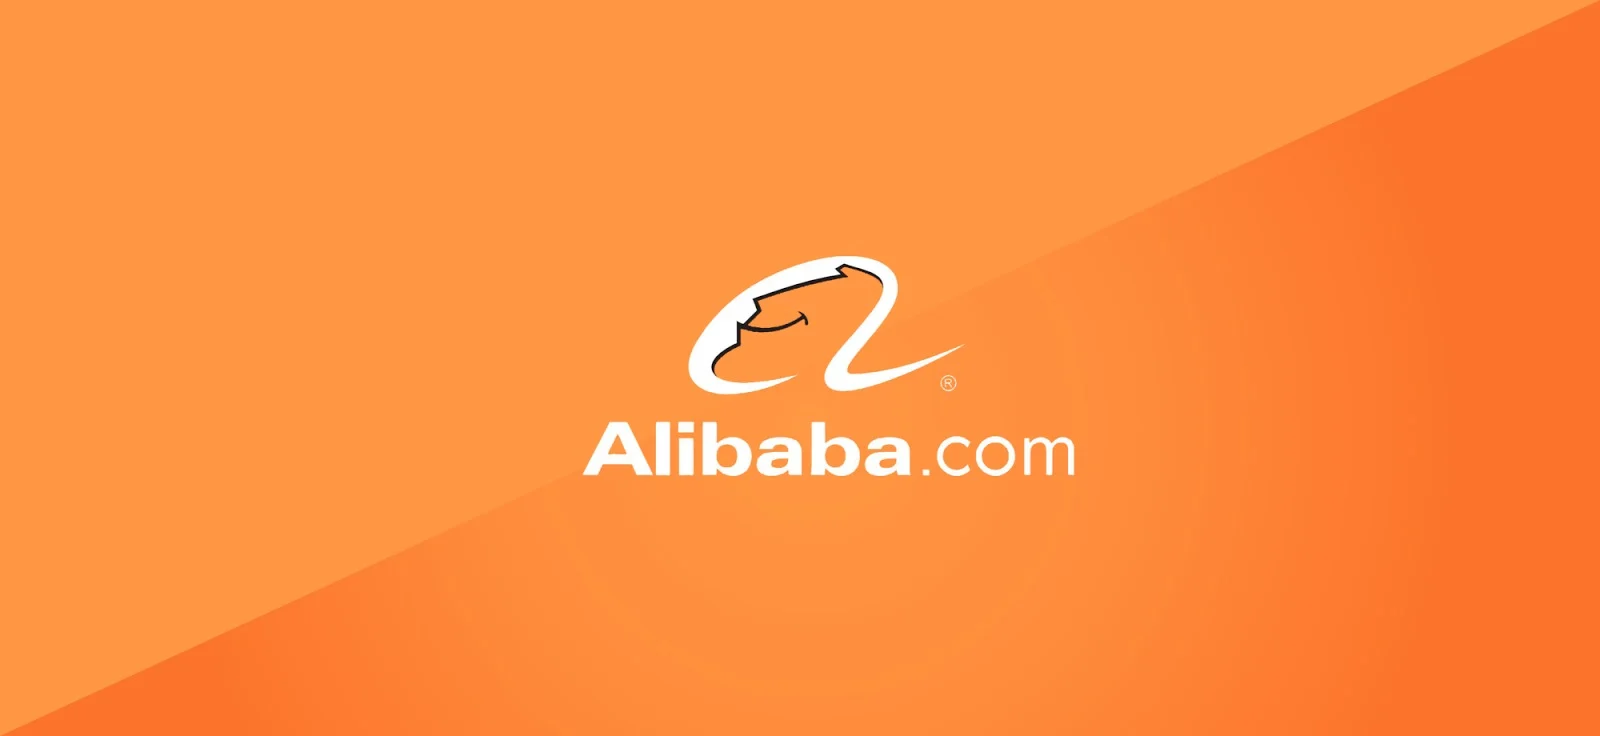 https://cms-wp.bigcommerce.com/wp-content/uploads/2015/03/buying-from-alibaba.jpg